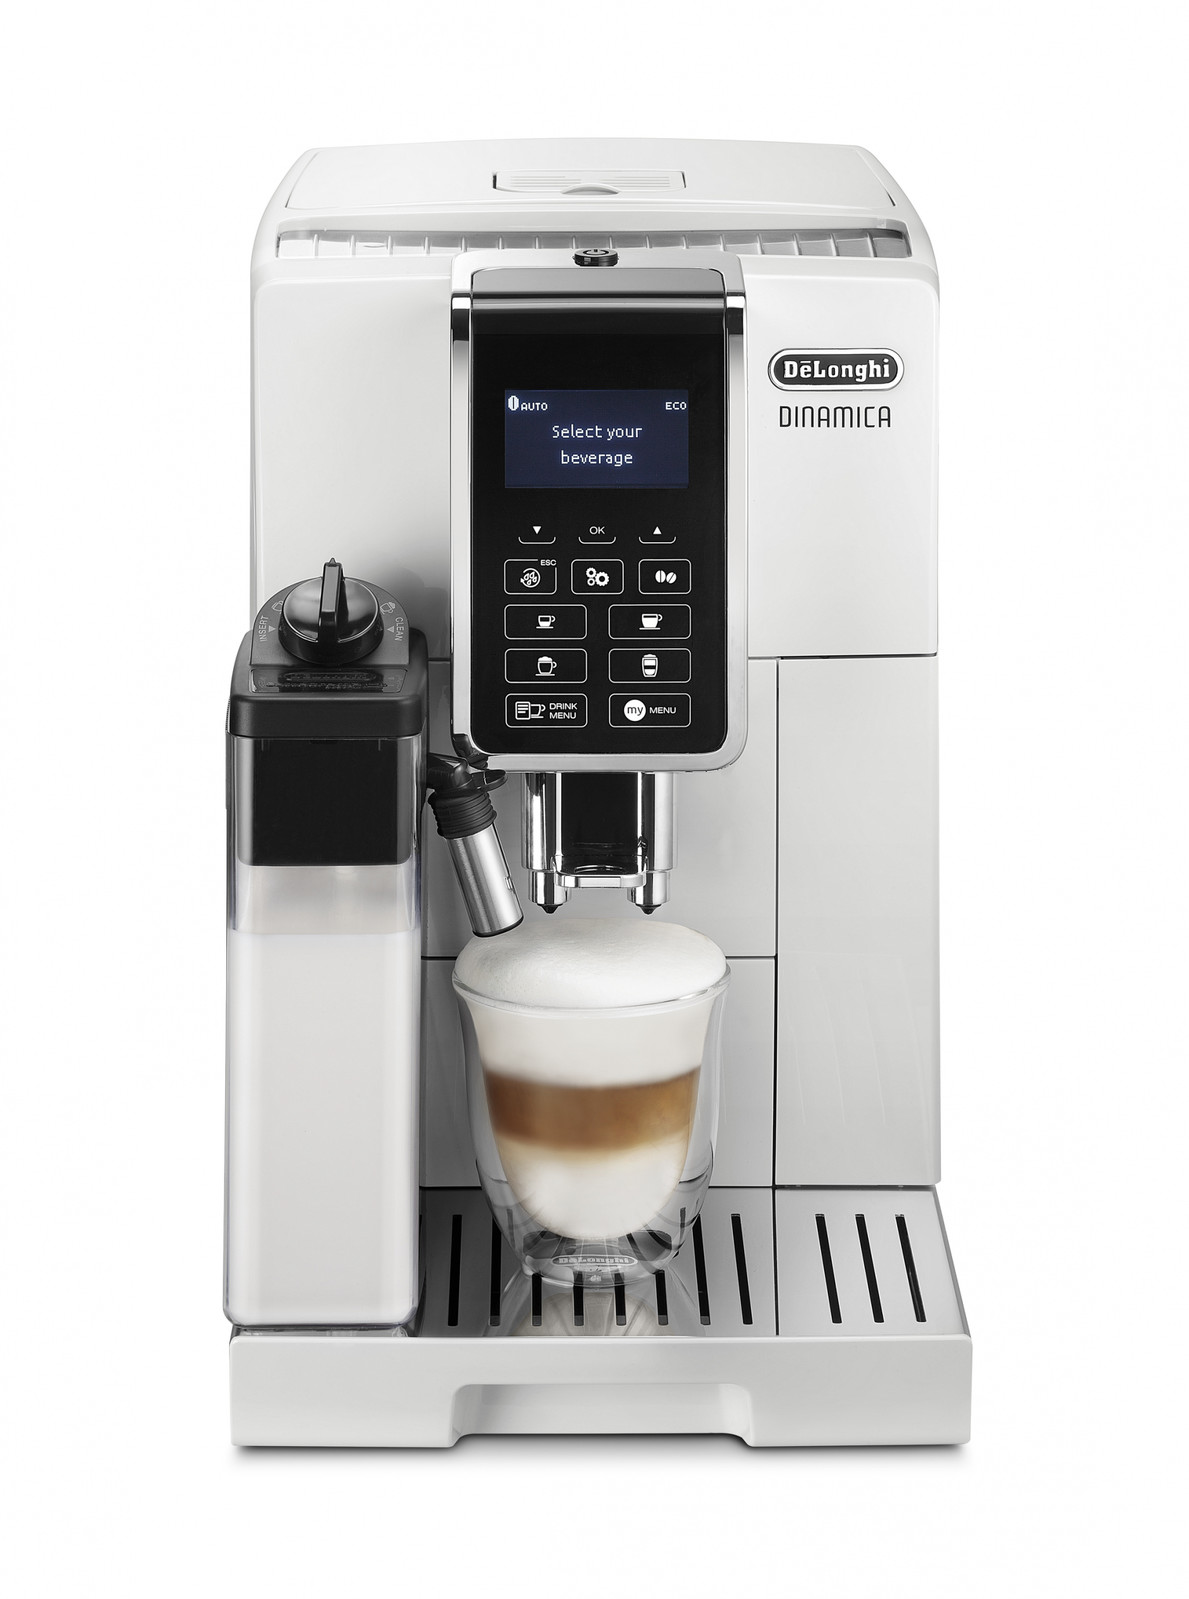 Automatický tlakový kávovar De'Longhi Dinamica 1450 W bílý